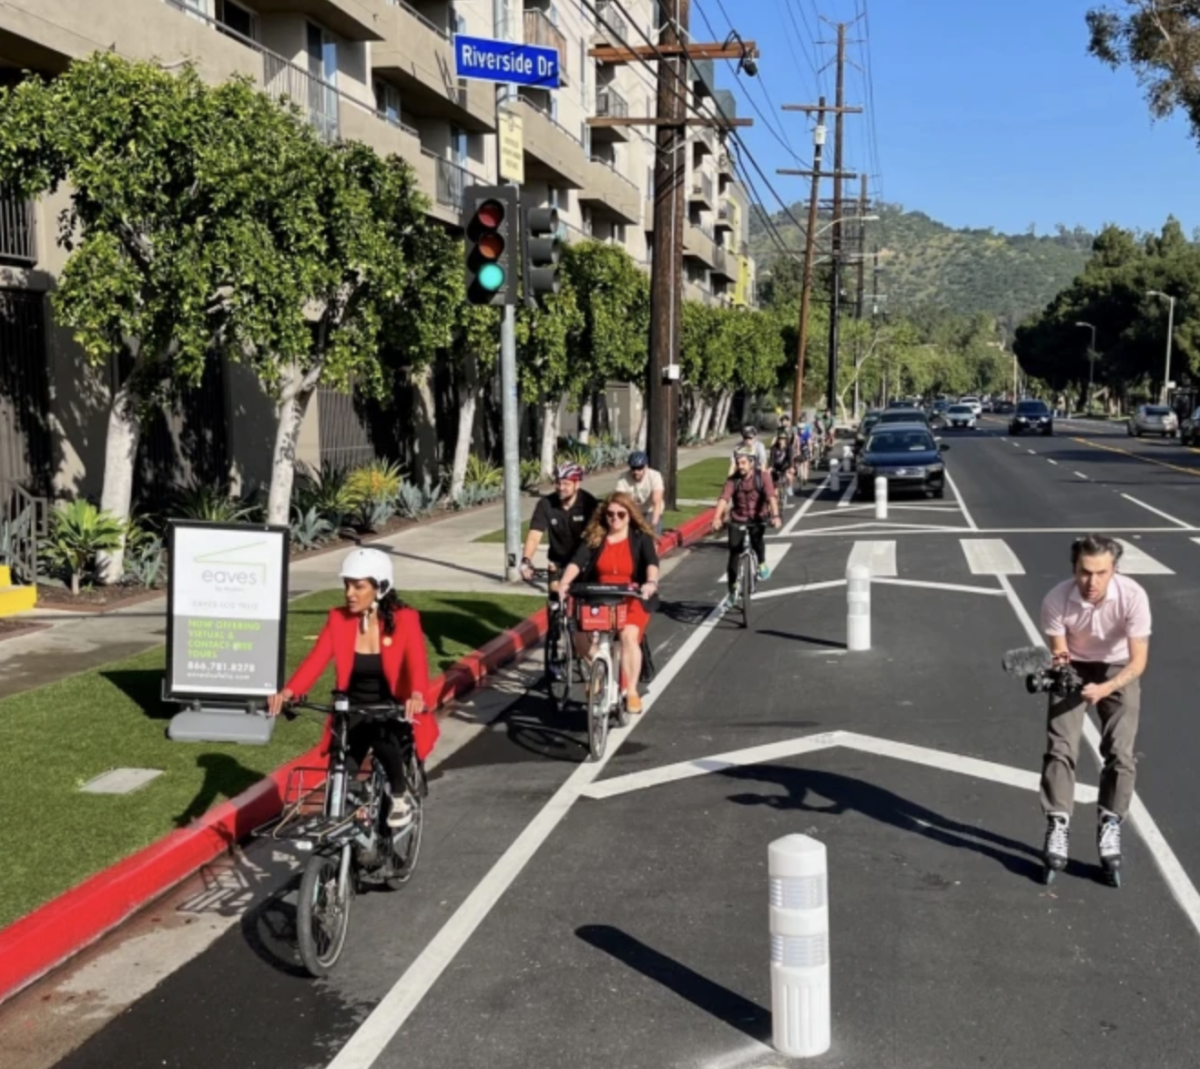 L.A. City Councilmember Nithya Raman and LADOT General Manager Seleta Reynolds celebrating Riverside Drive's new protected bike lanes. Photos by Joe Linton/Streetsblog L.A.